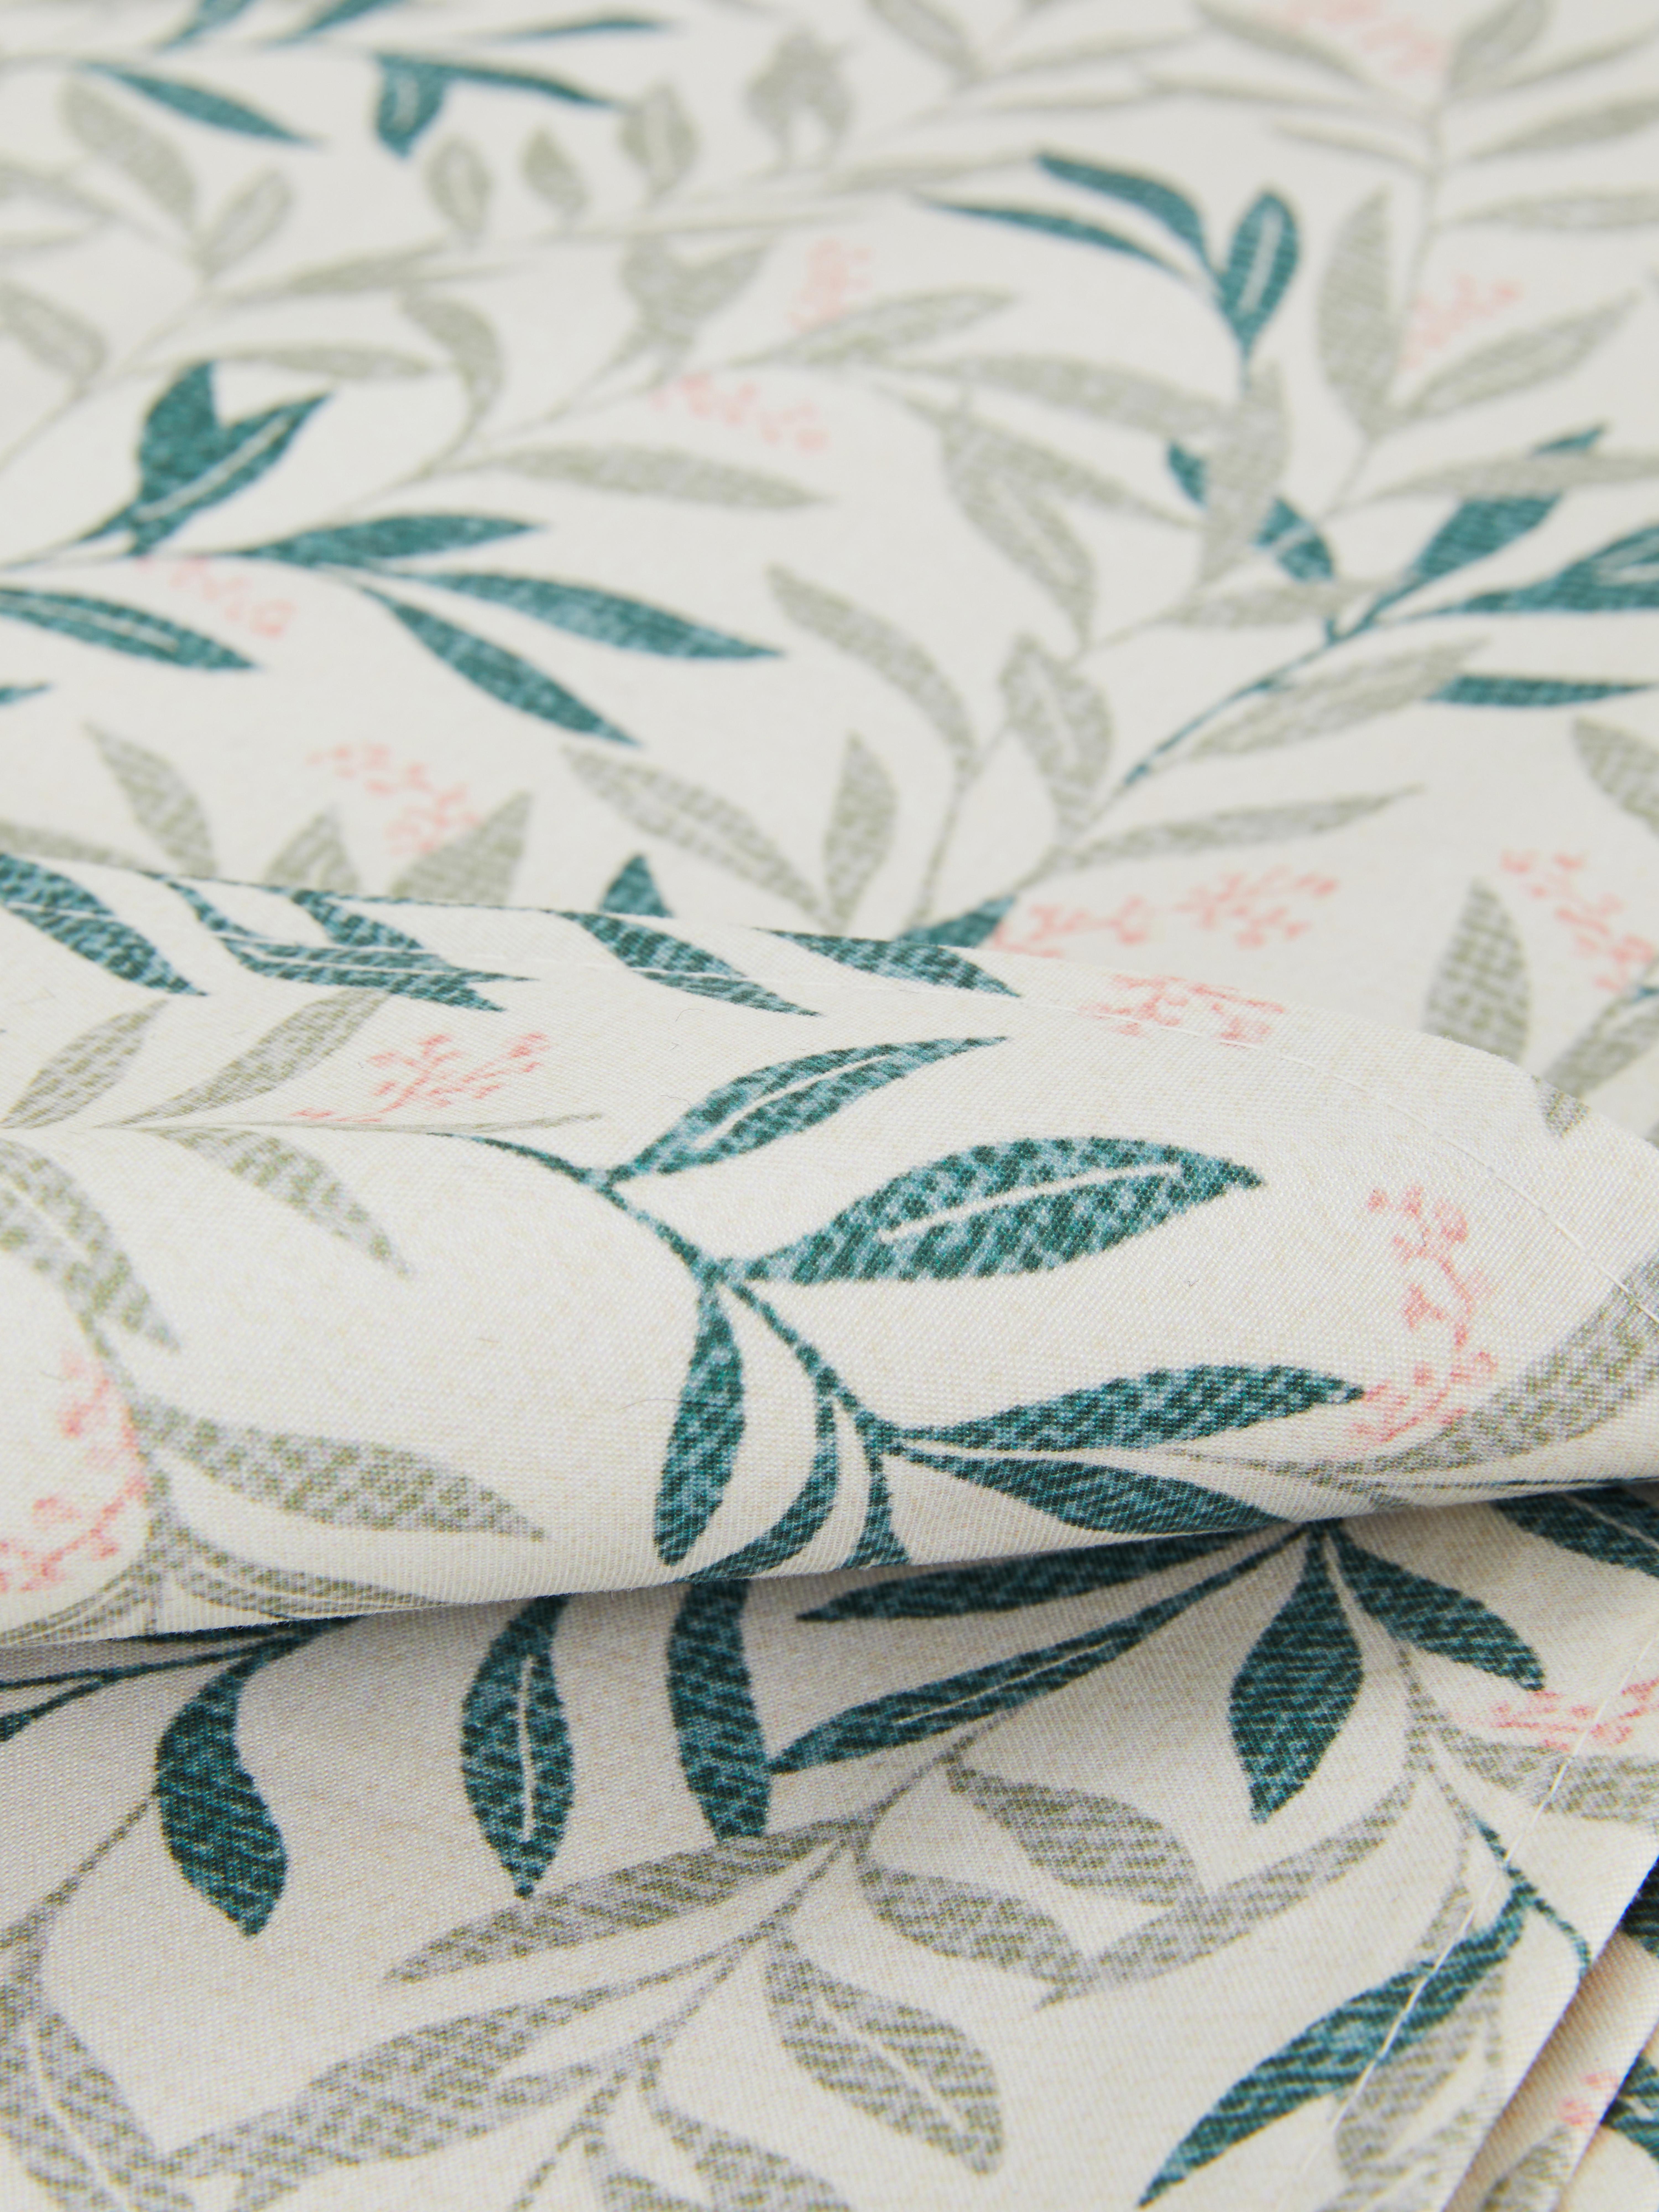 Leaf Print Tablecloth